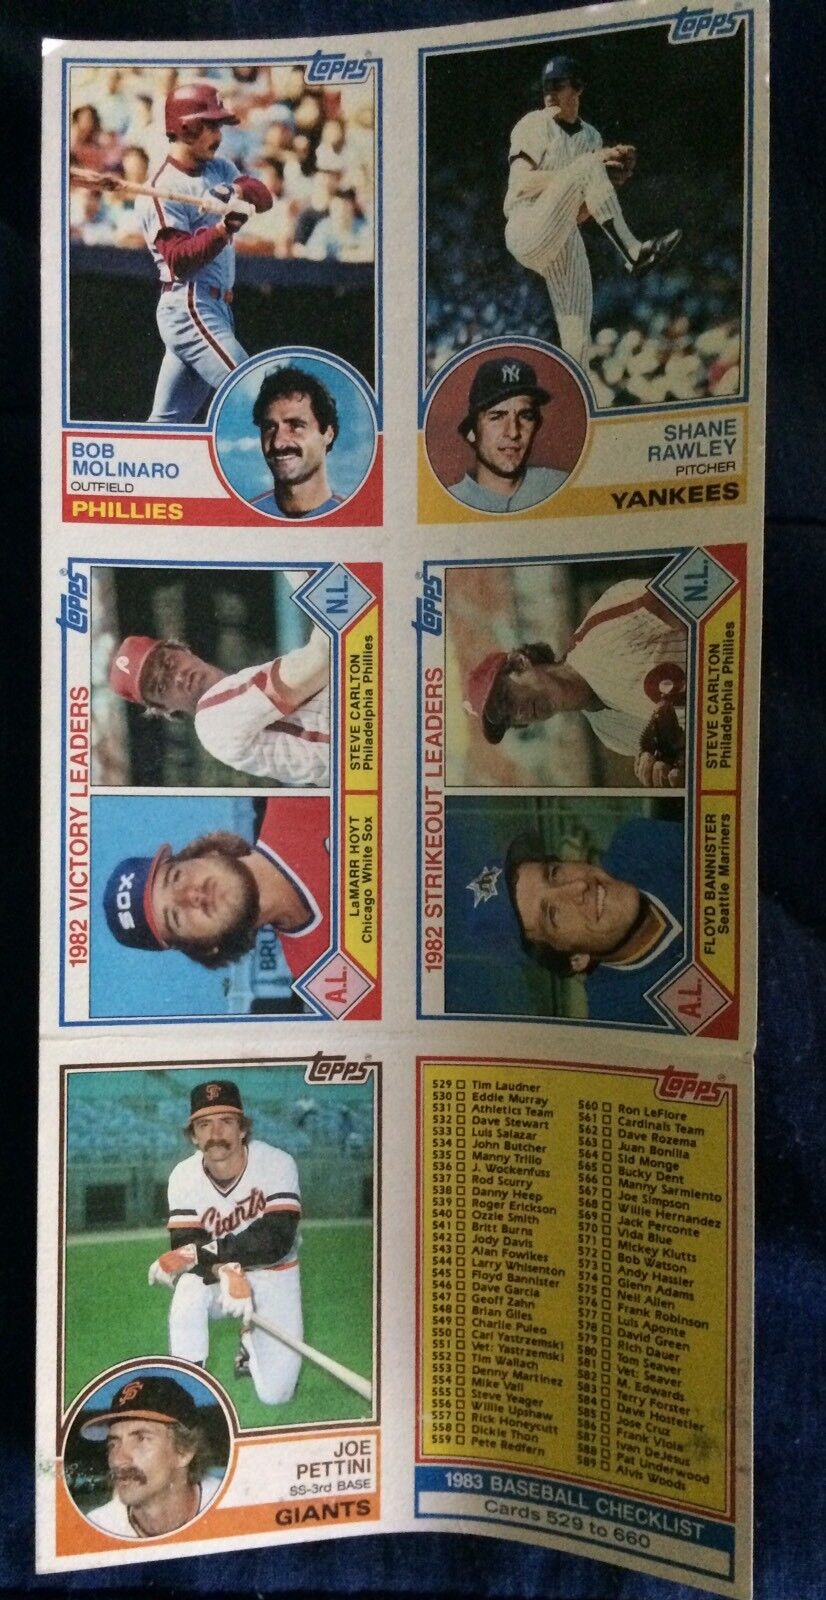 Scarce 1983 Topps Baseball Card Uncut Sheet W TWO Steve Carlton Phillies Cards